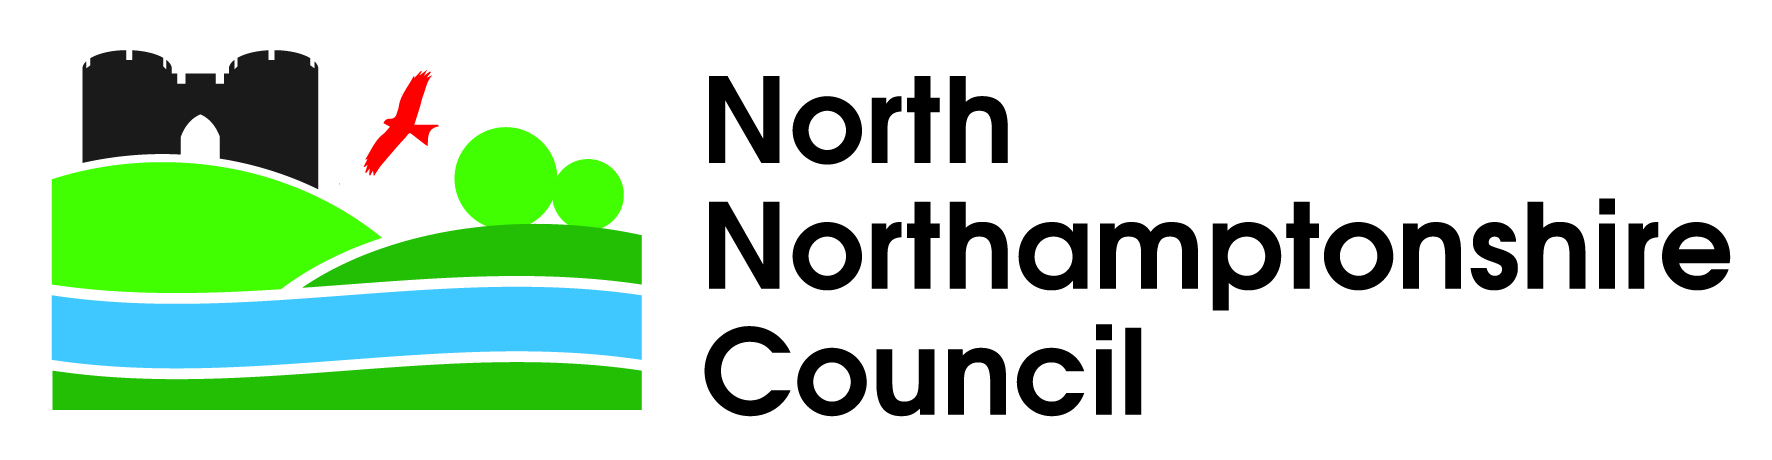 North Northamptonshire Council 